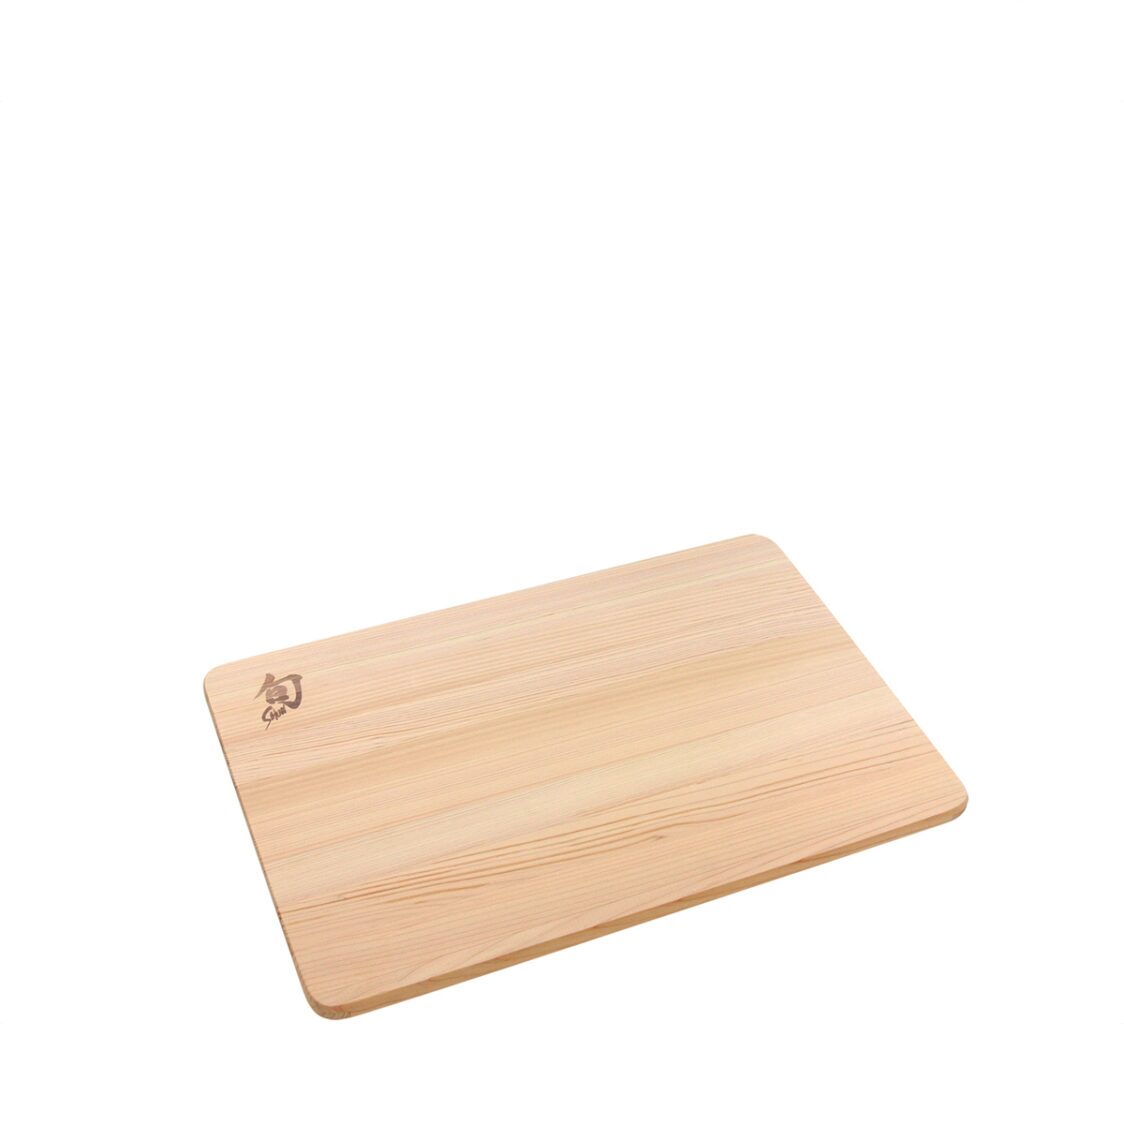 Kai Shun Hinoki Cutting Board - Thin Type - S Size Made In Japan DM-0811